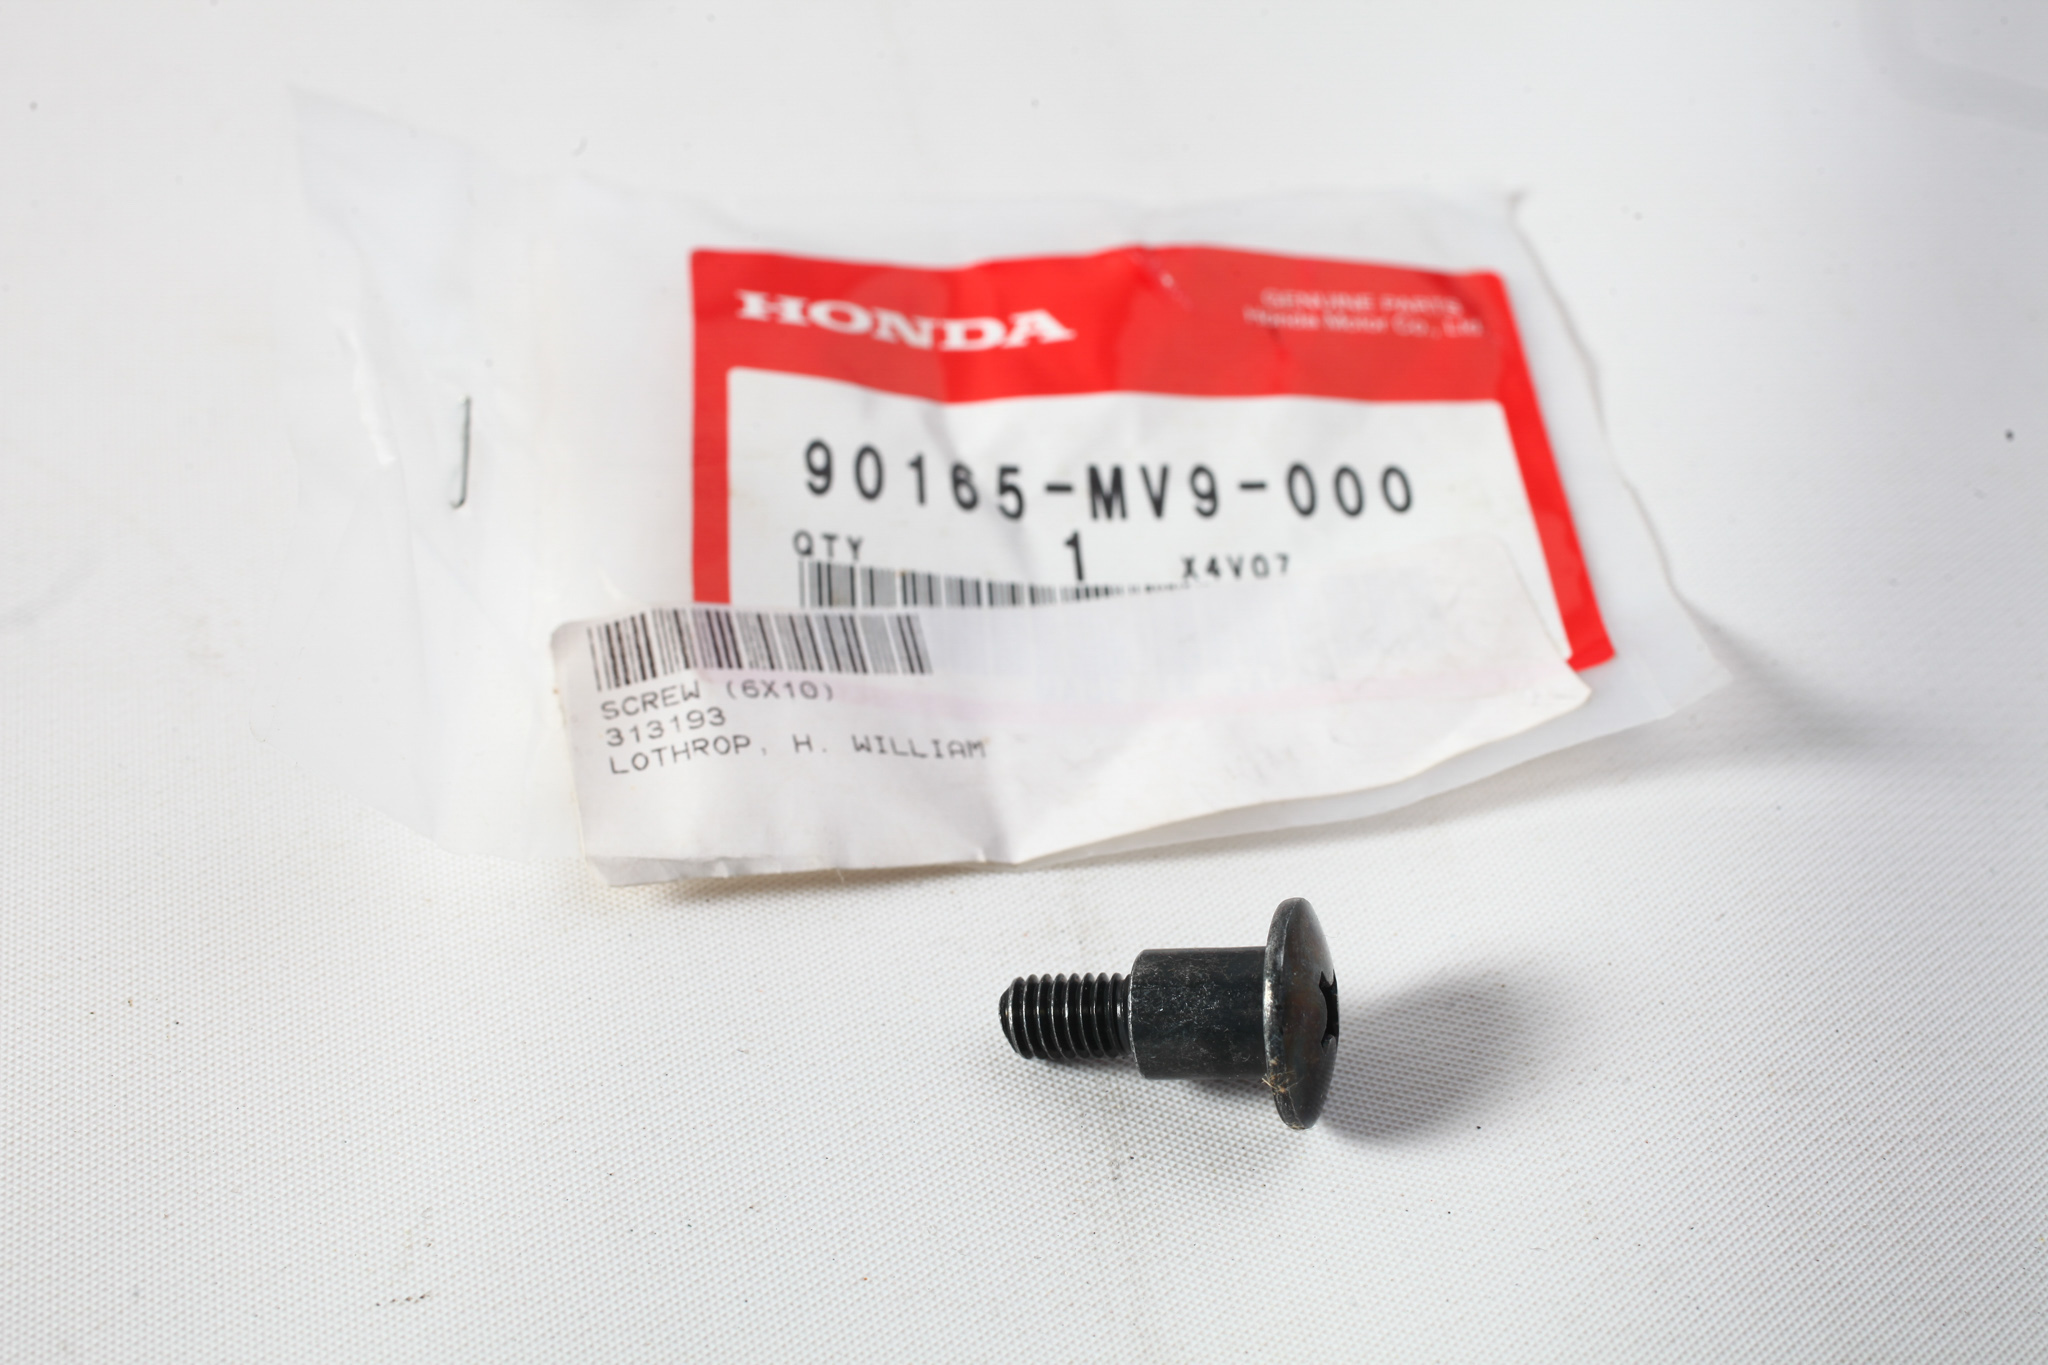 GENUINE Honda NOS 90165-MV9-000 SCREW (6X10) for sale online | eBay